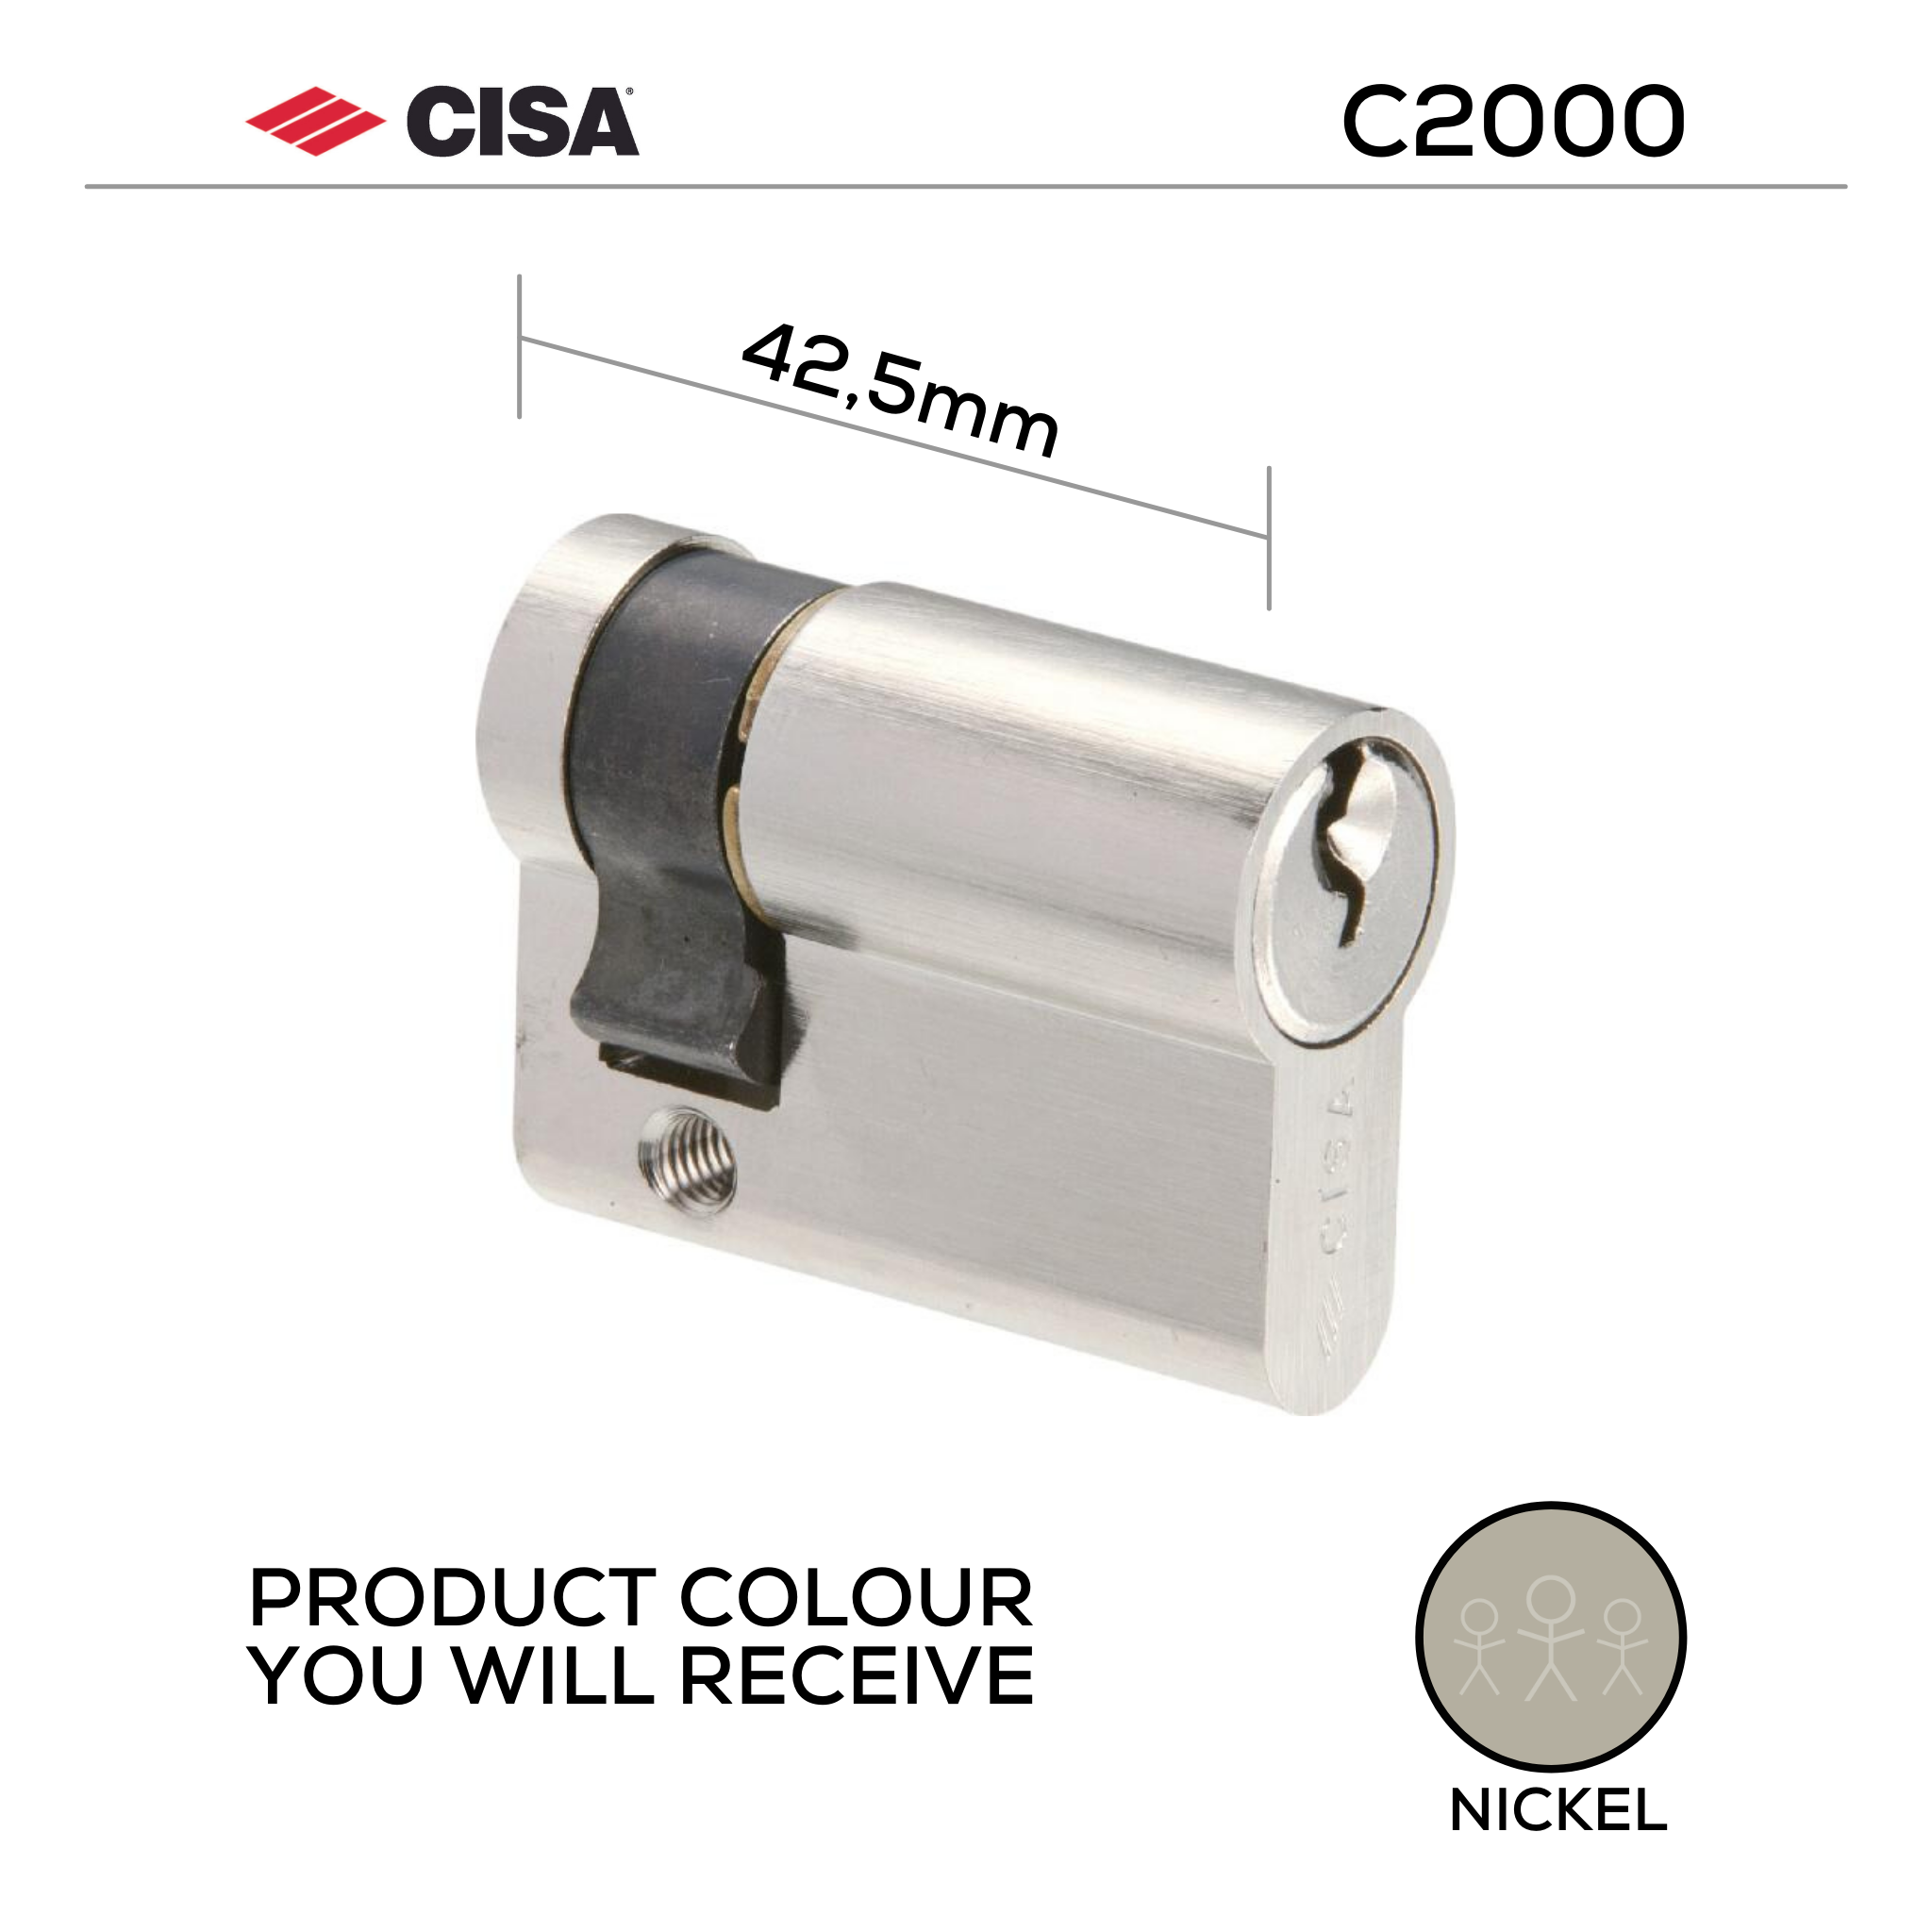 0G304-09-12-KD, 42,5mm - 32.5/10, Half (Single Cylinder), C2000, Key, Keyed to Differ (Standard), 3 Keys, 5 Pin, Nickel, CISA